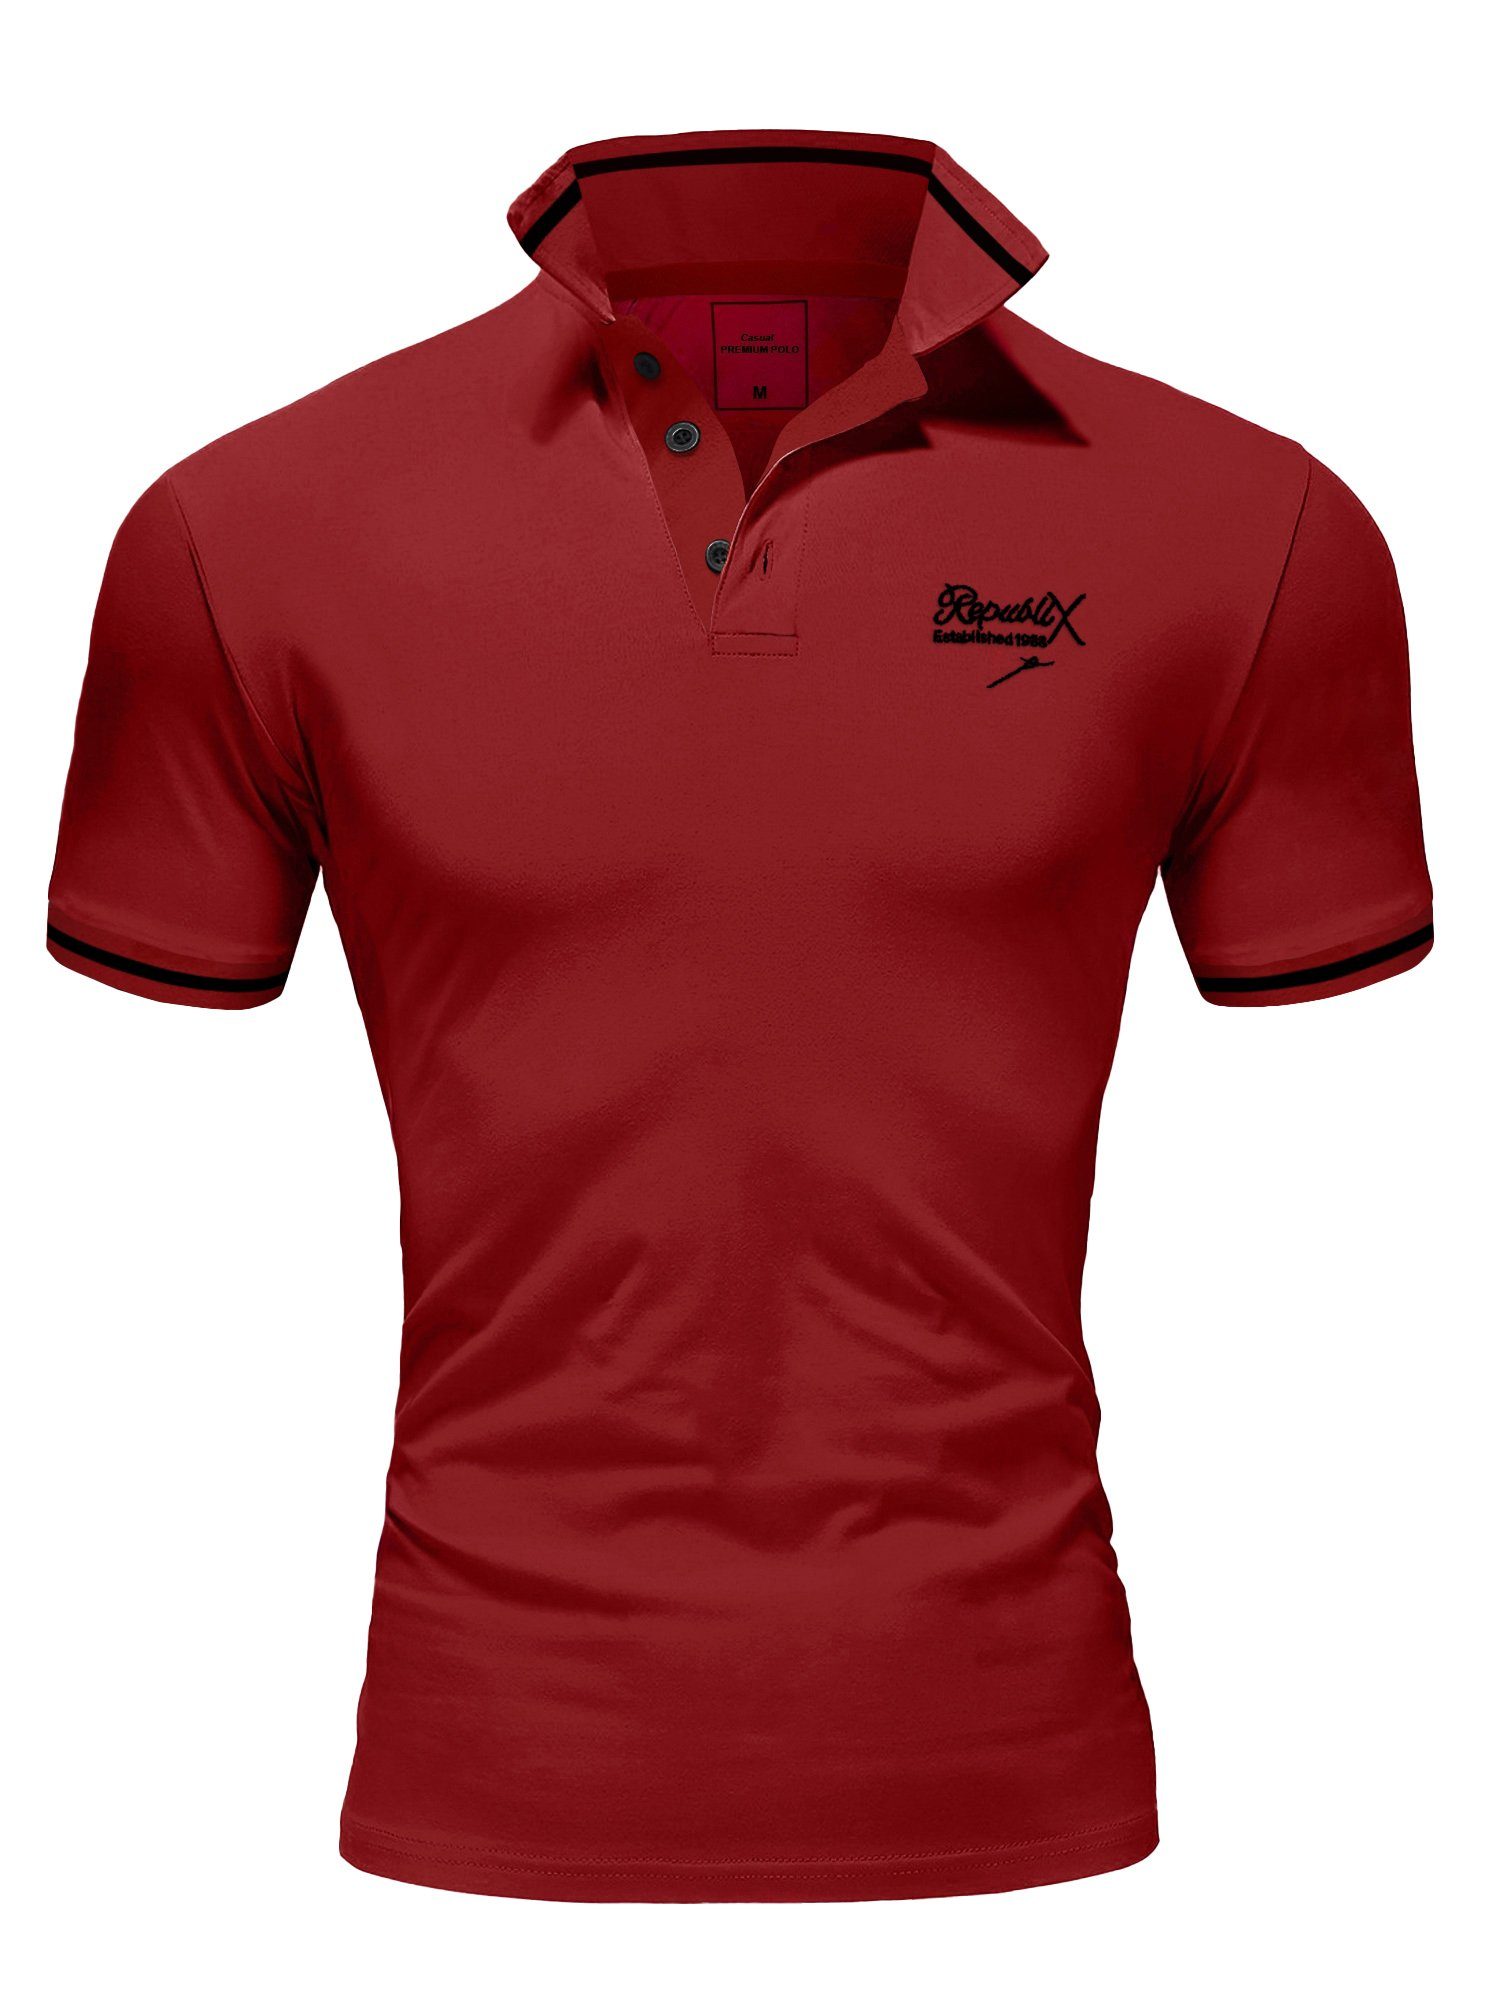 REPUBLIX GABRIEL Poloshirt Polo Bordeaux/Schwarz Herren Kurzarm Basic Hemd Kontrast